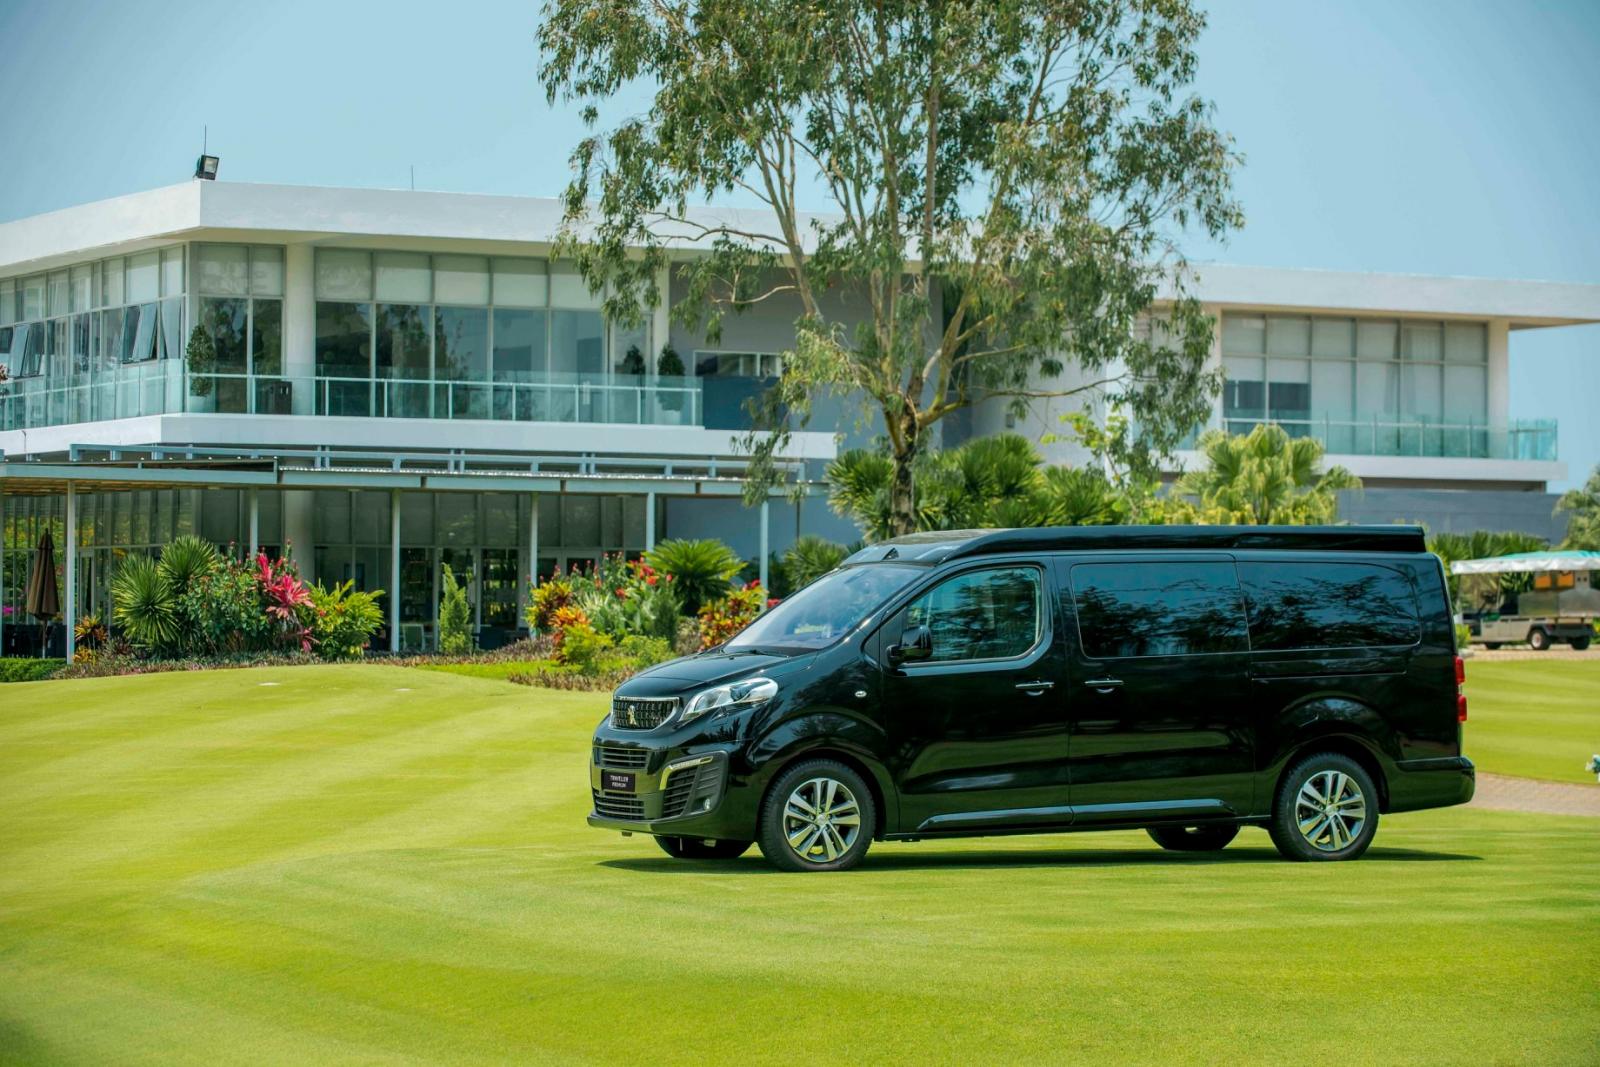 Peugeot Peugeot khác Traveller Luxury 2019 - Cần bán xe Peugeot Traveller Luxury năm 2019, màu đen